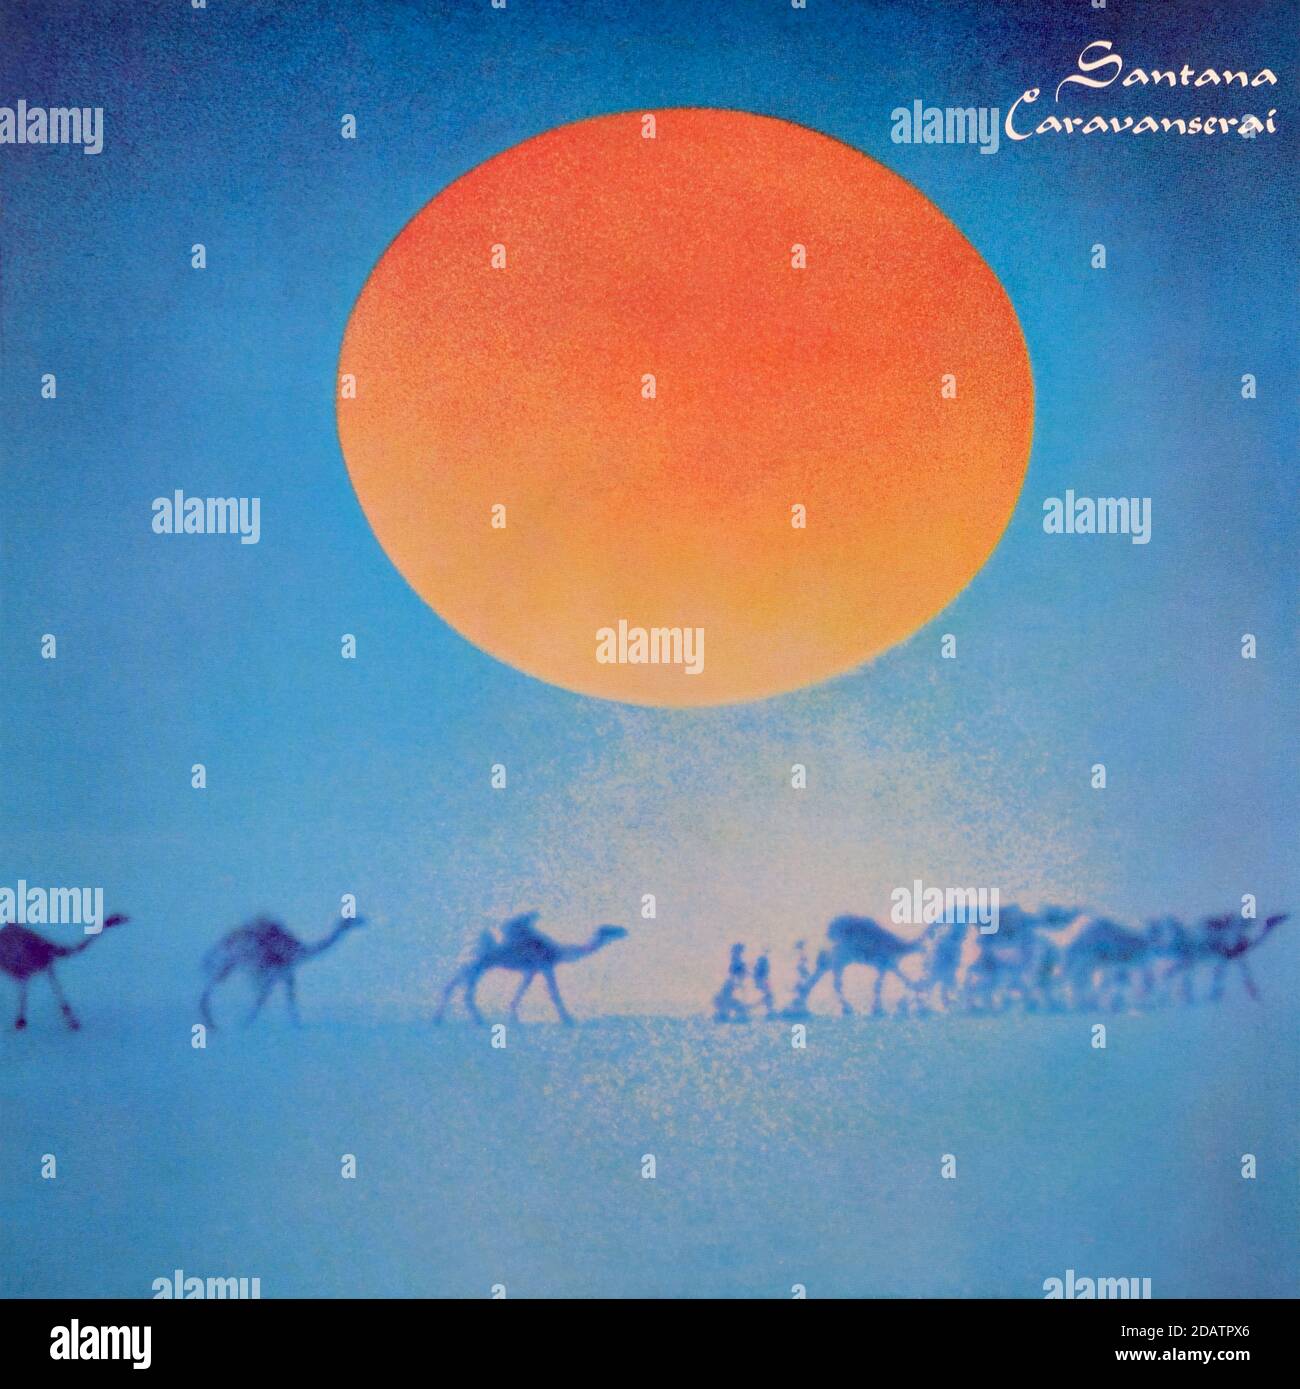 Santana - original Vinyl Album Cover - Caravanserai - 1972 Stockfoto